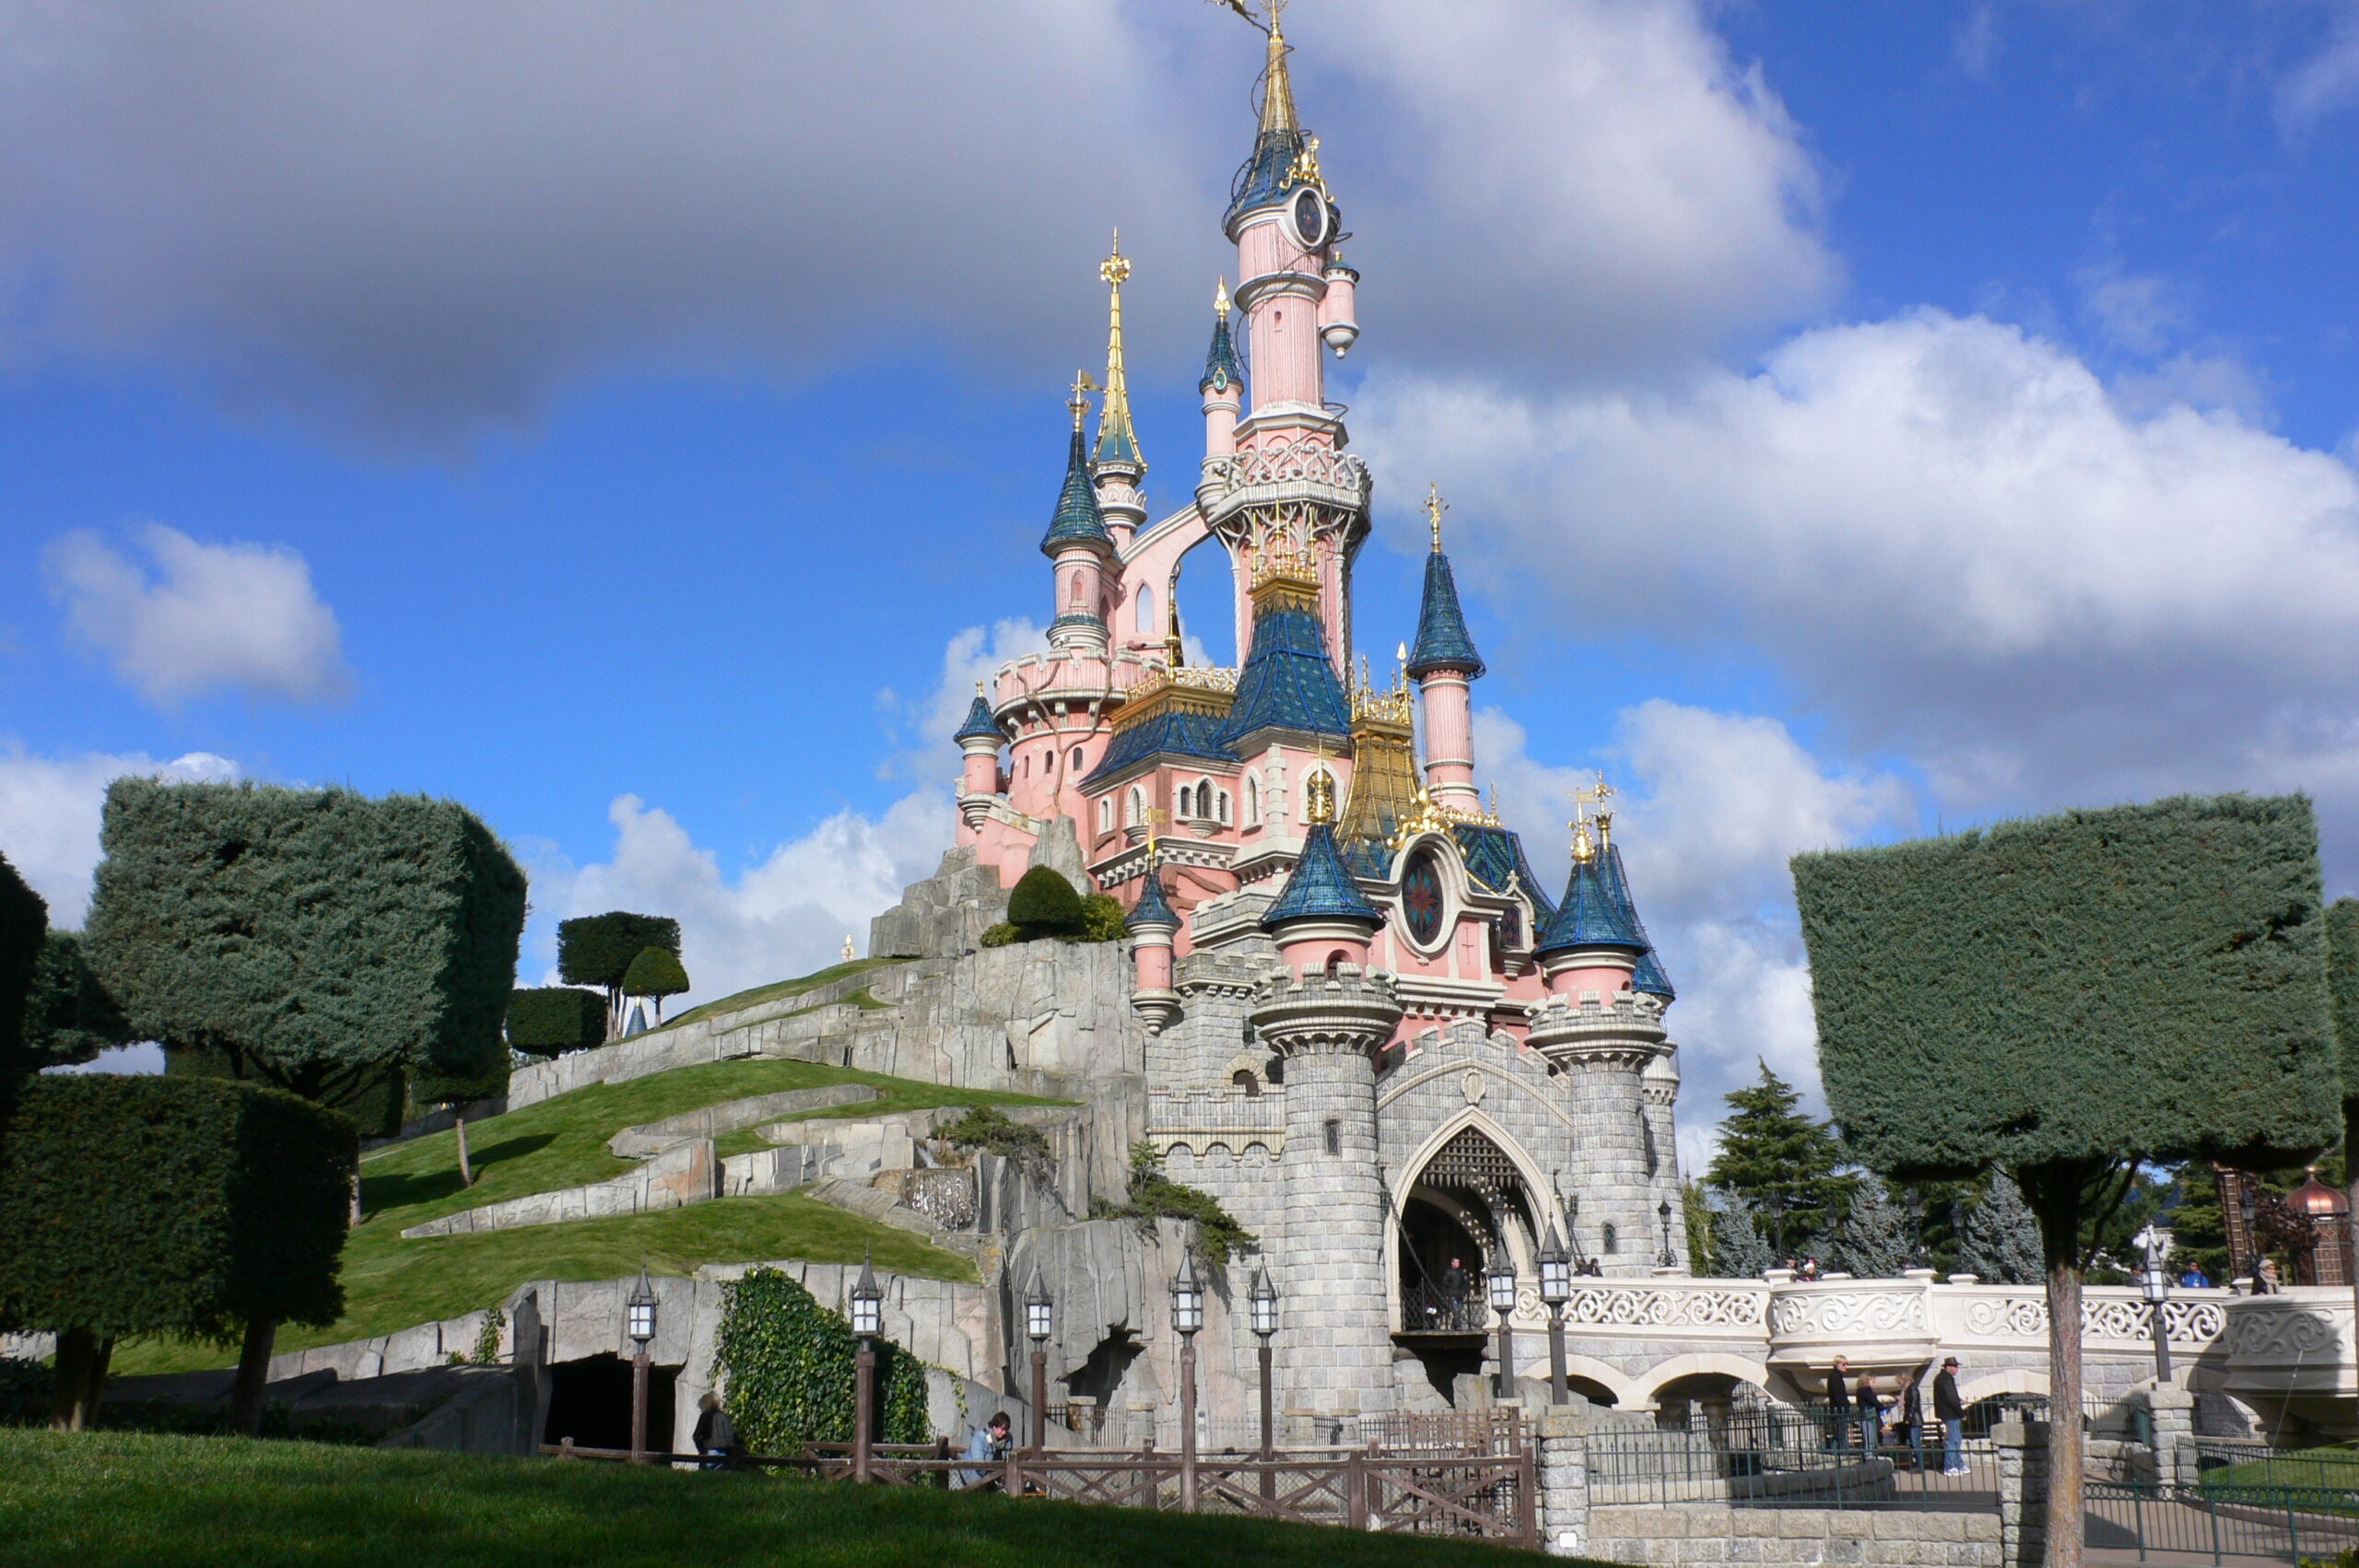 Disneyland สวนสนุกระดับโลกมีวิธีสรรหาและบริหารคนอย่างไร